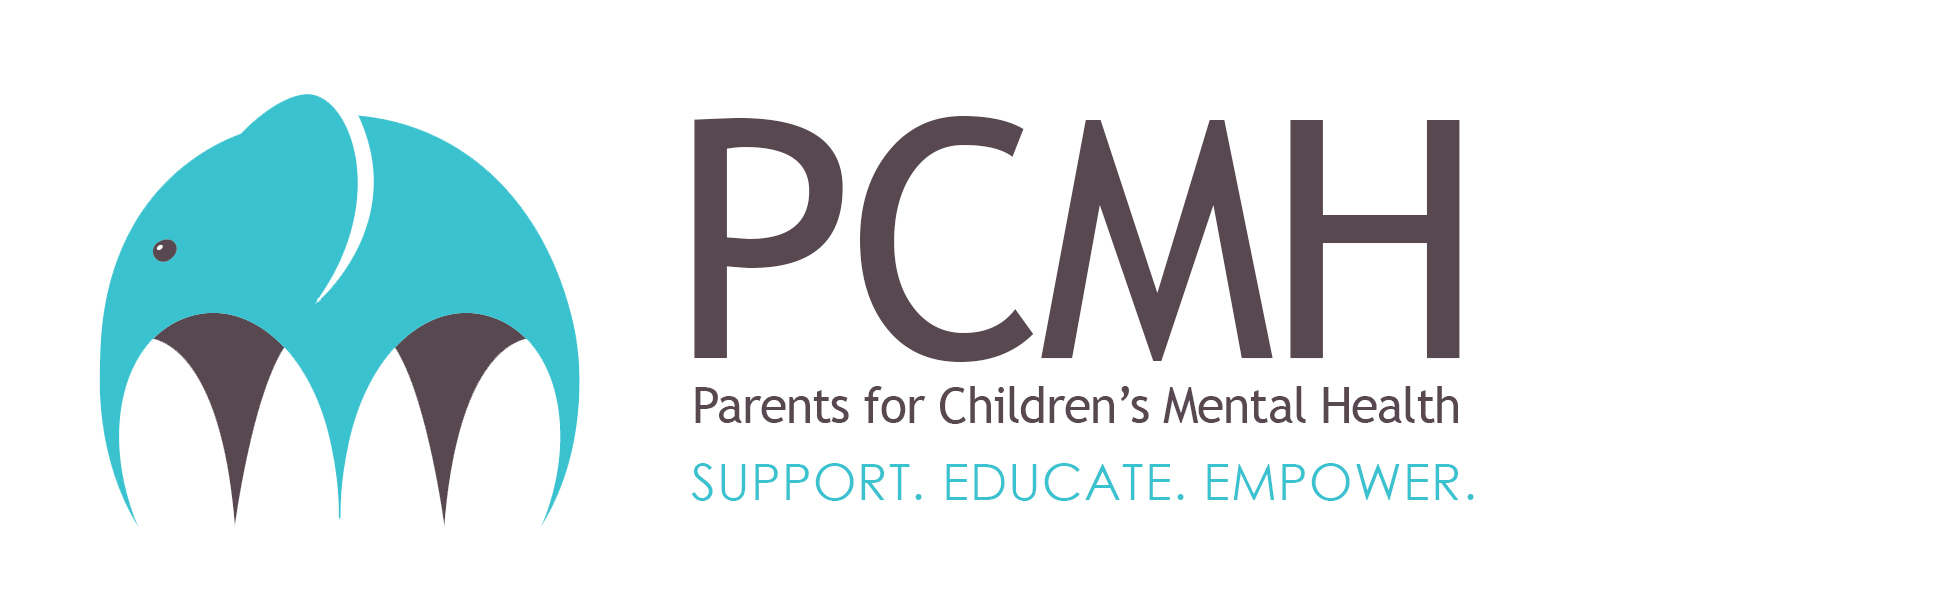 Parents for Children's Mental Health